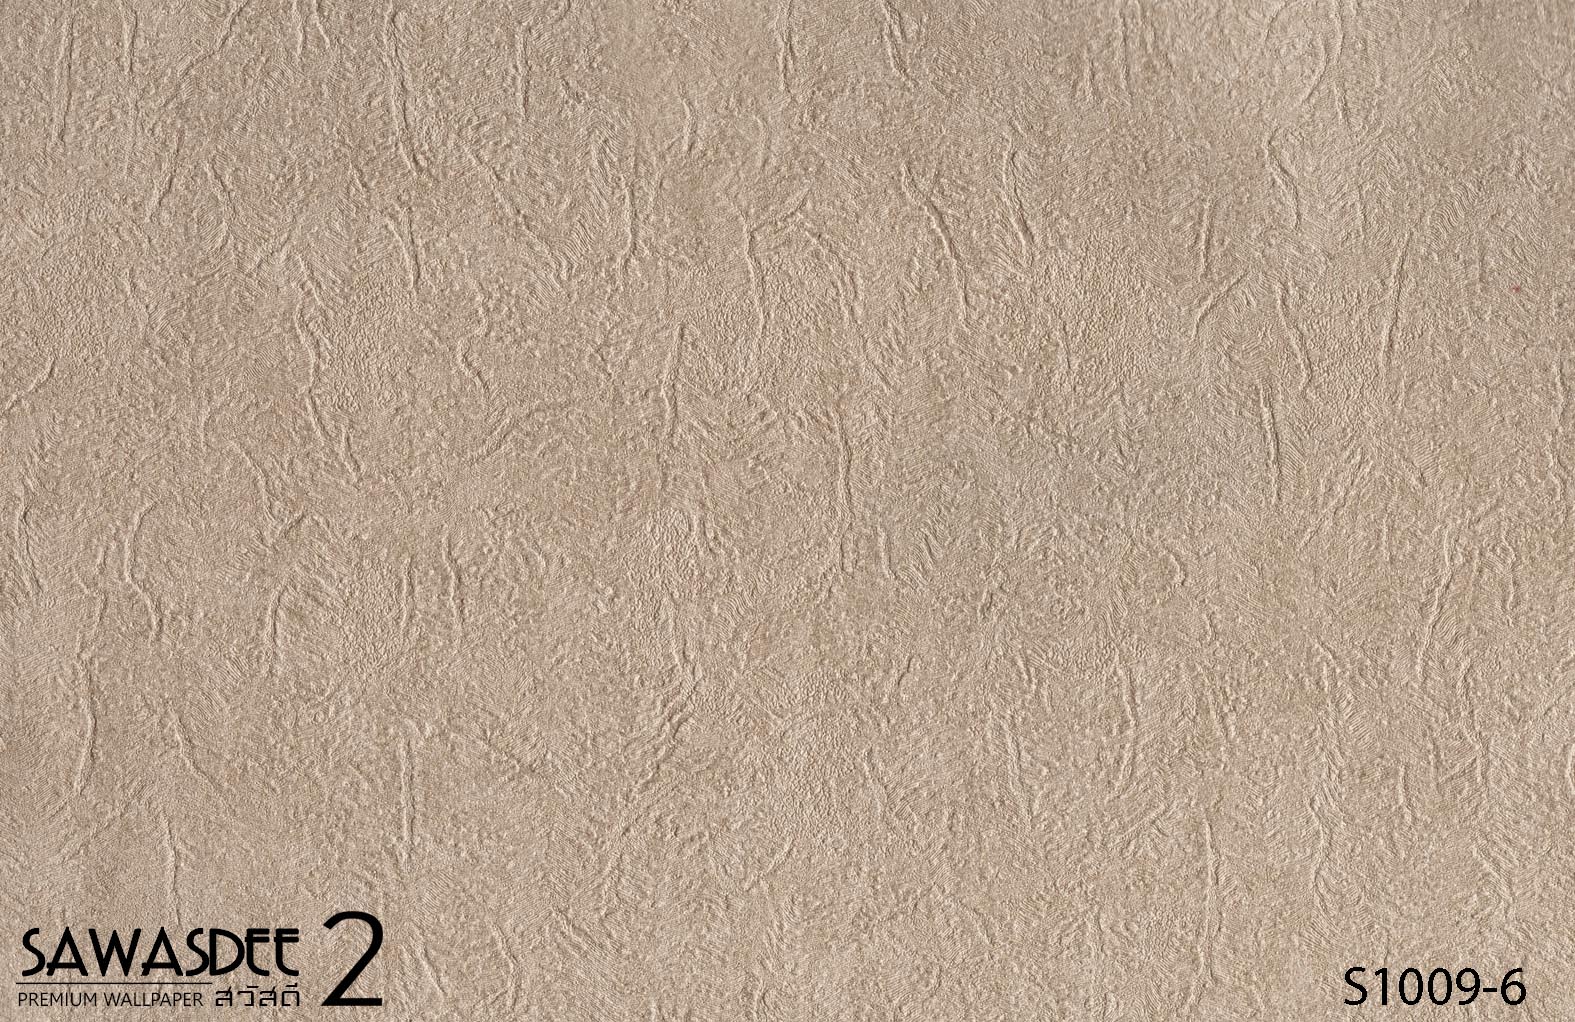 Wallpaper (SAWASDEE 2) S1009-6